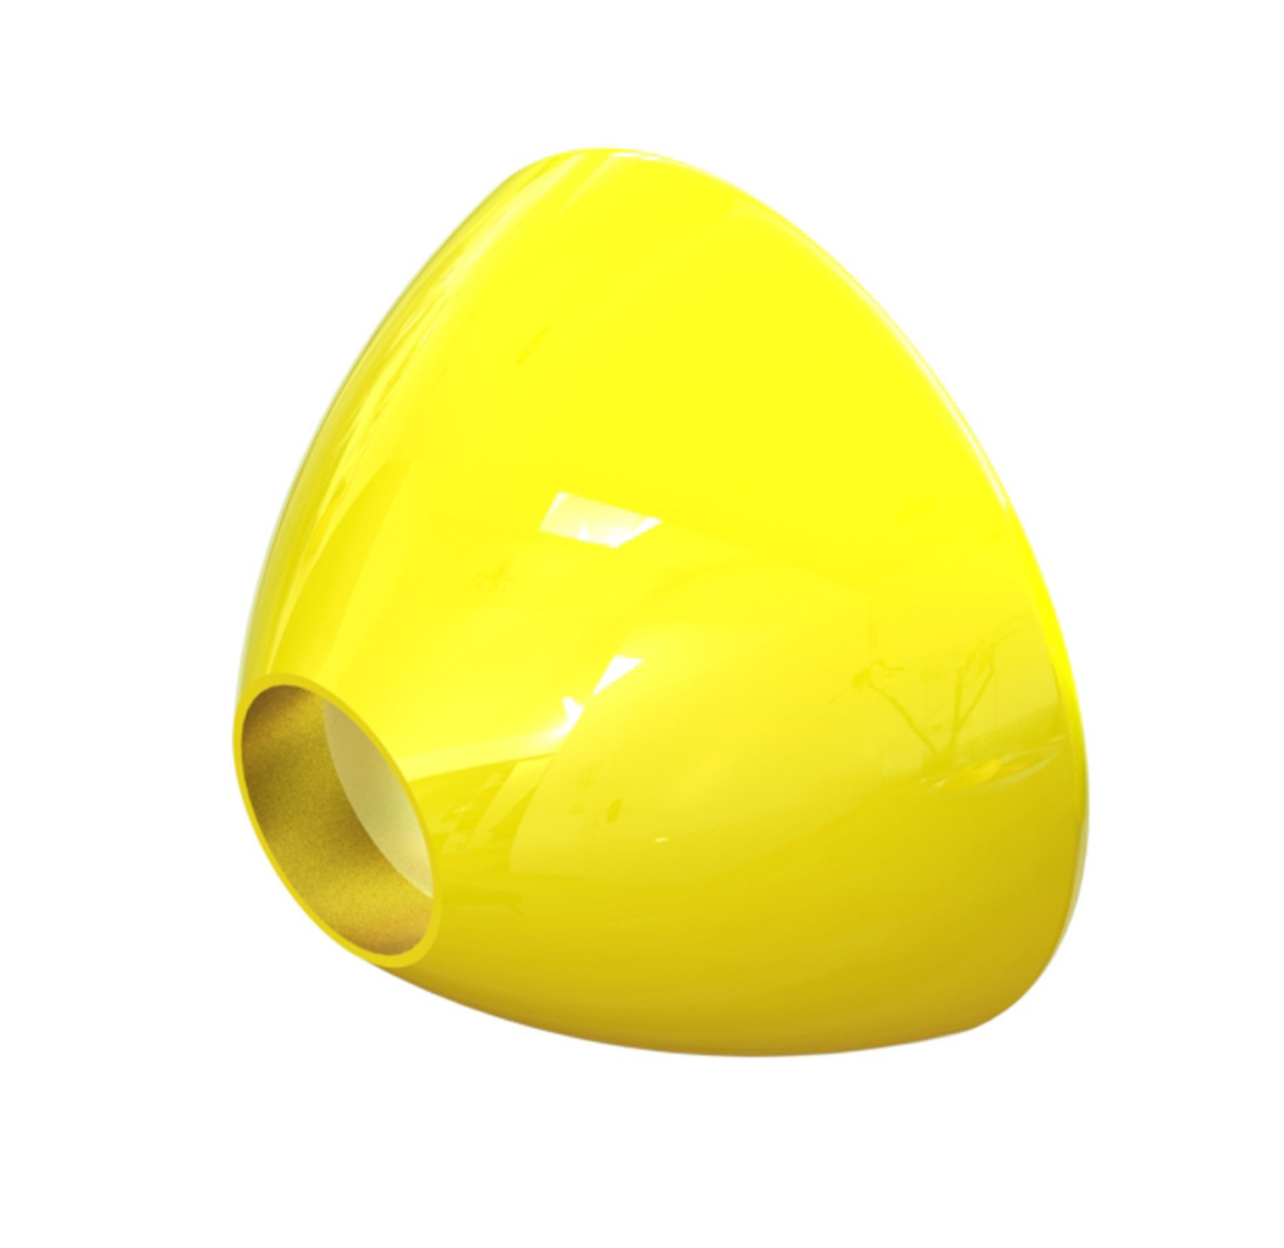 Pro Sportfisher Conehead - Large - Fluoro Yellow